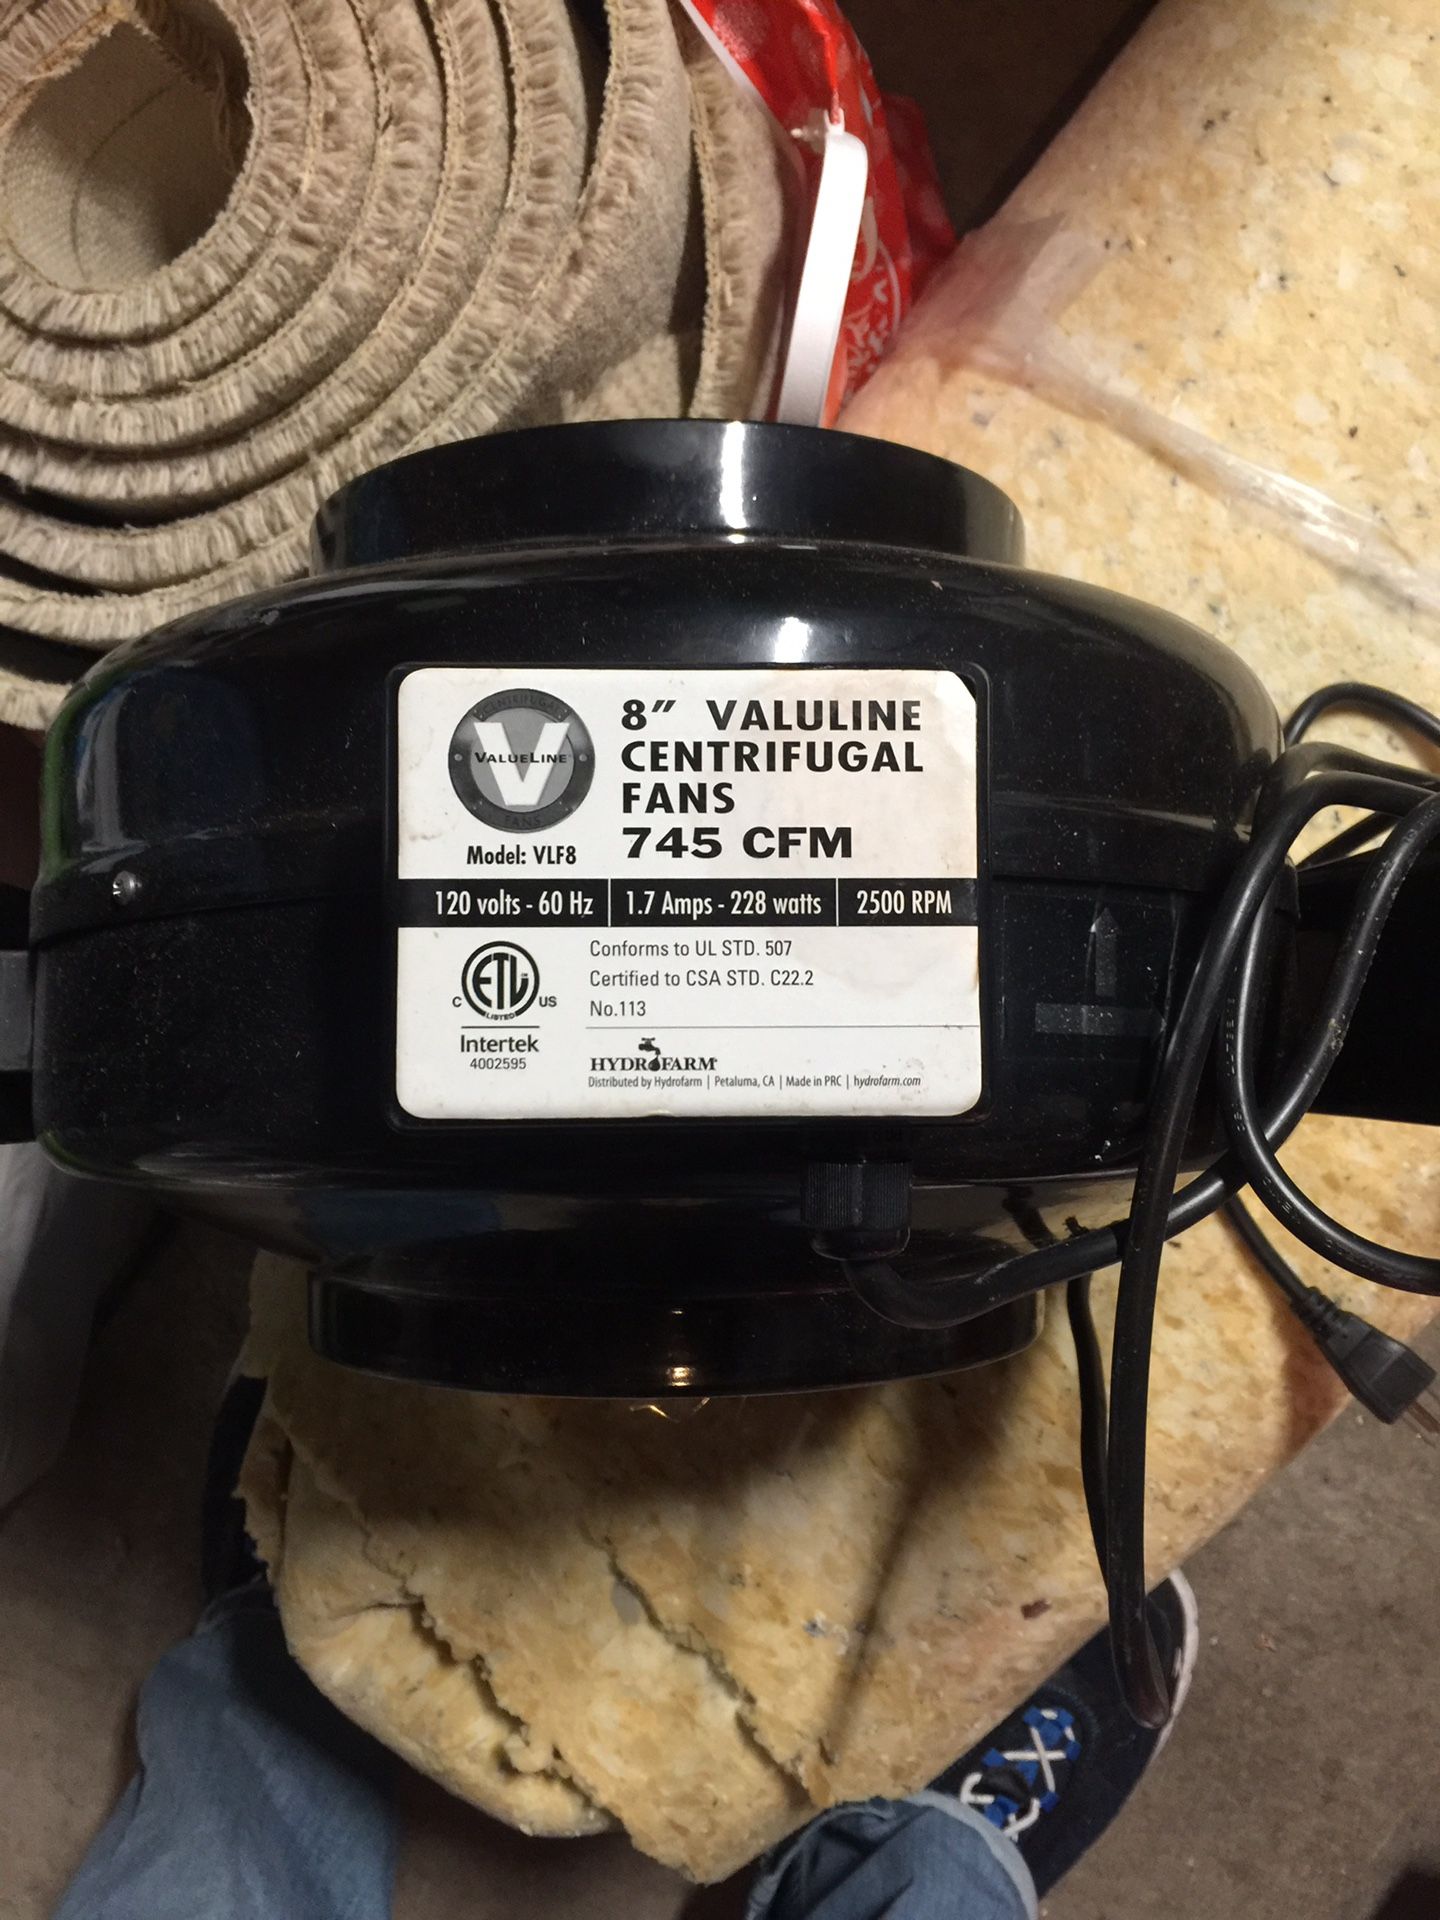 ValuLine 8" Inline Fan 745 CFM (two pics)